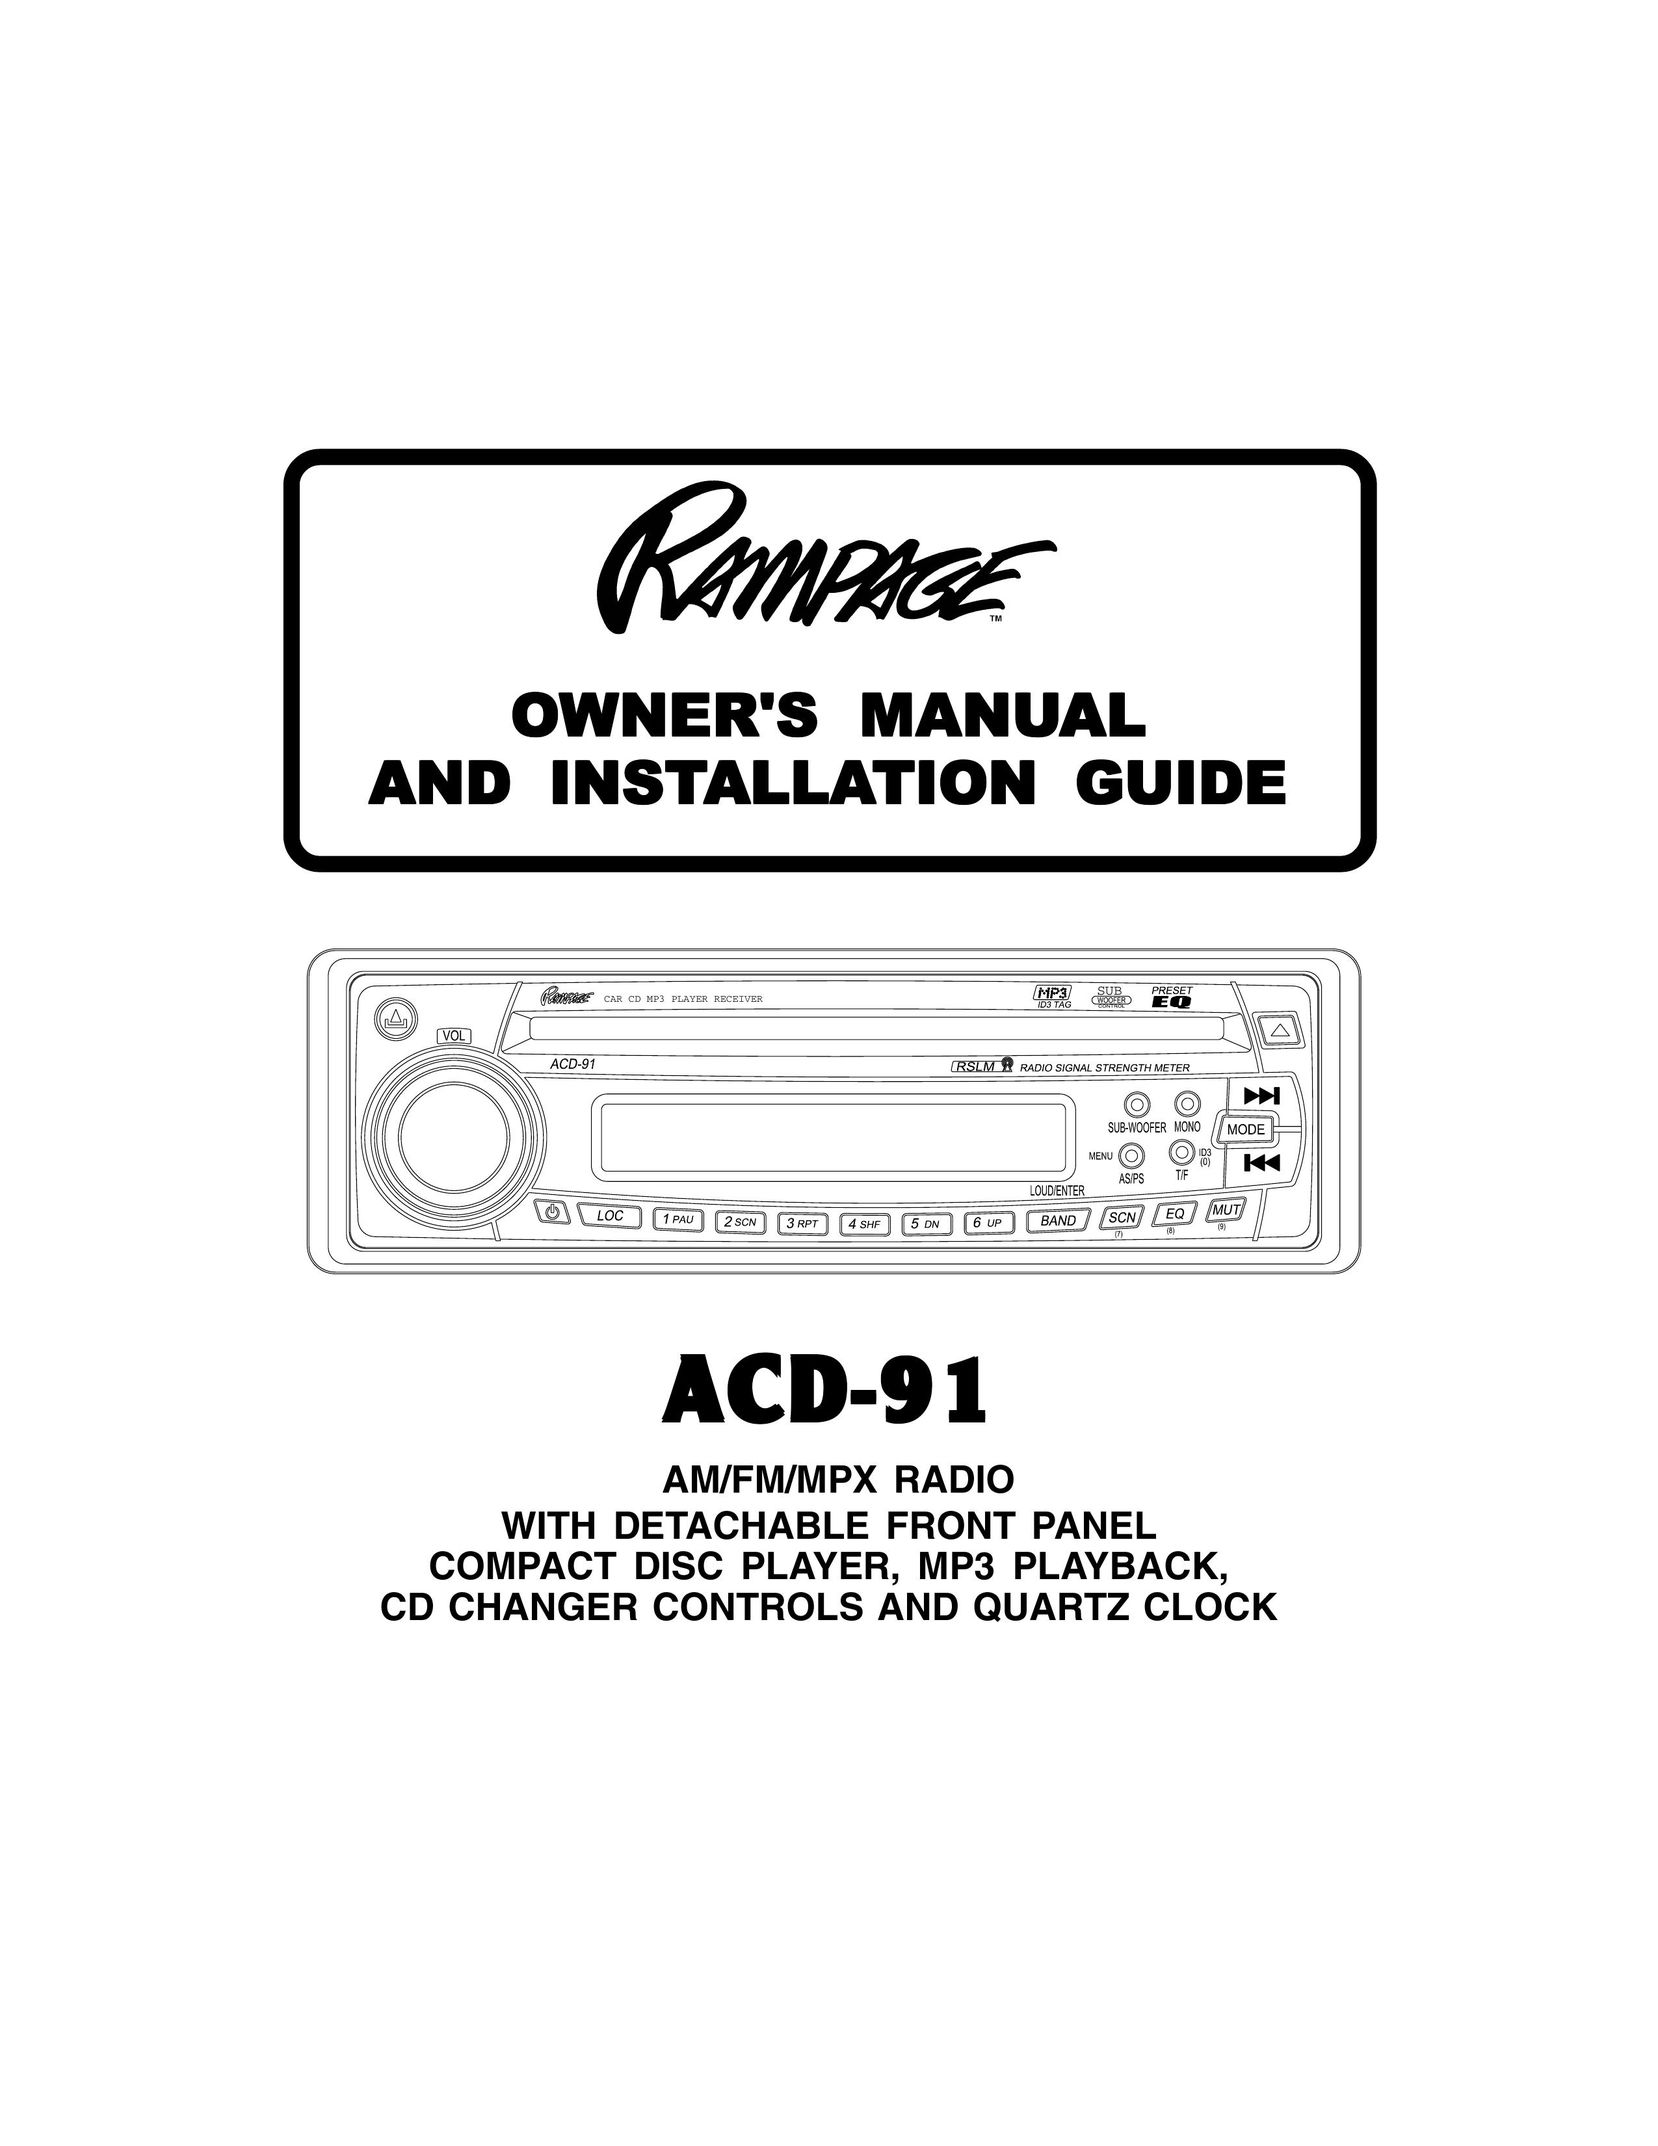 Hyundai ACD-91 Car Stereo System User Manual